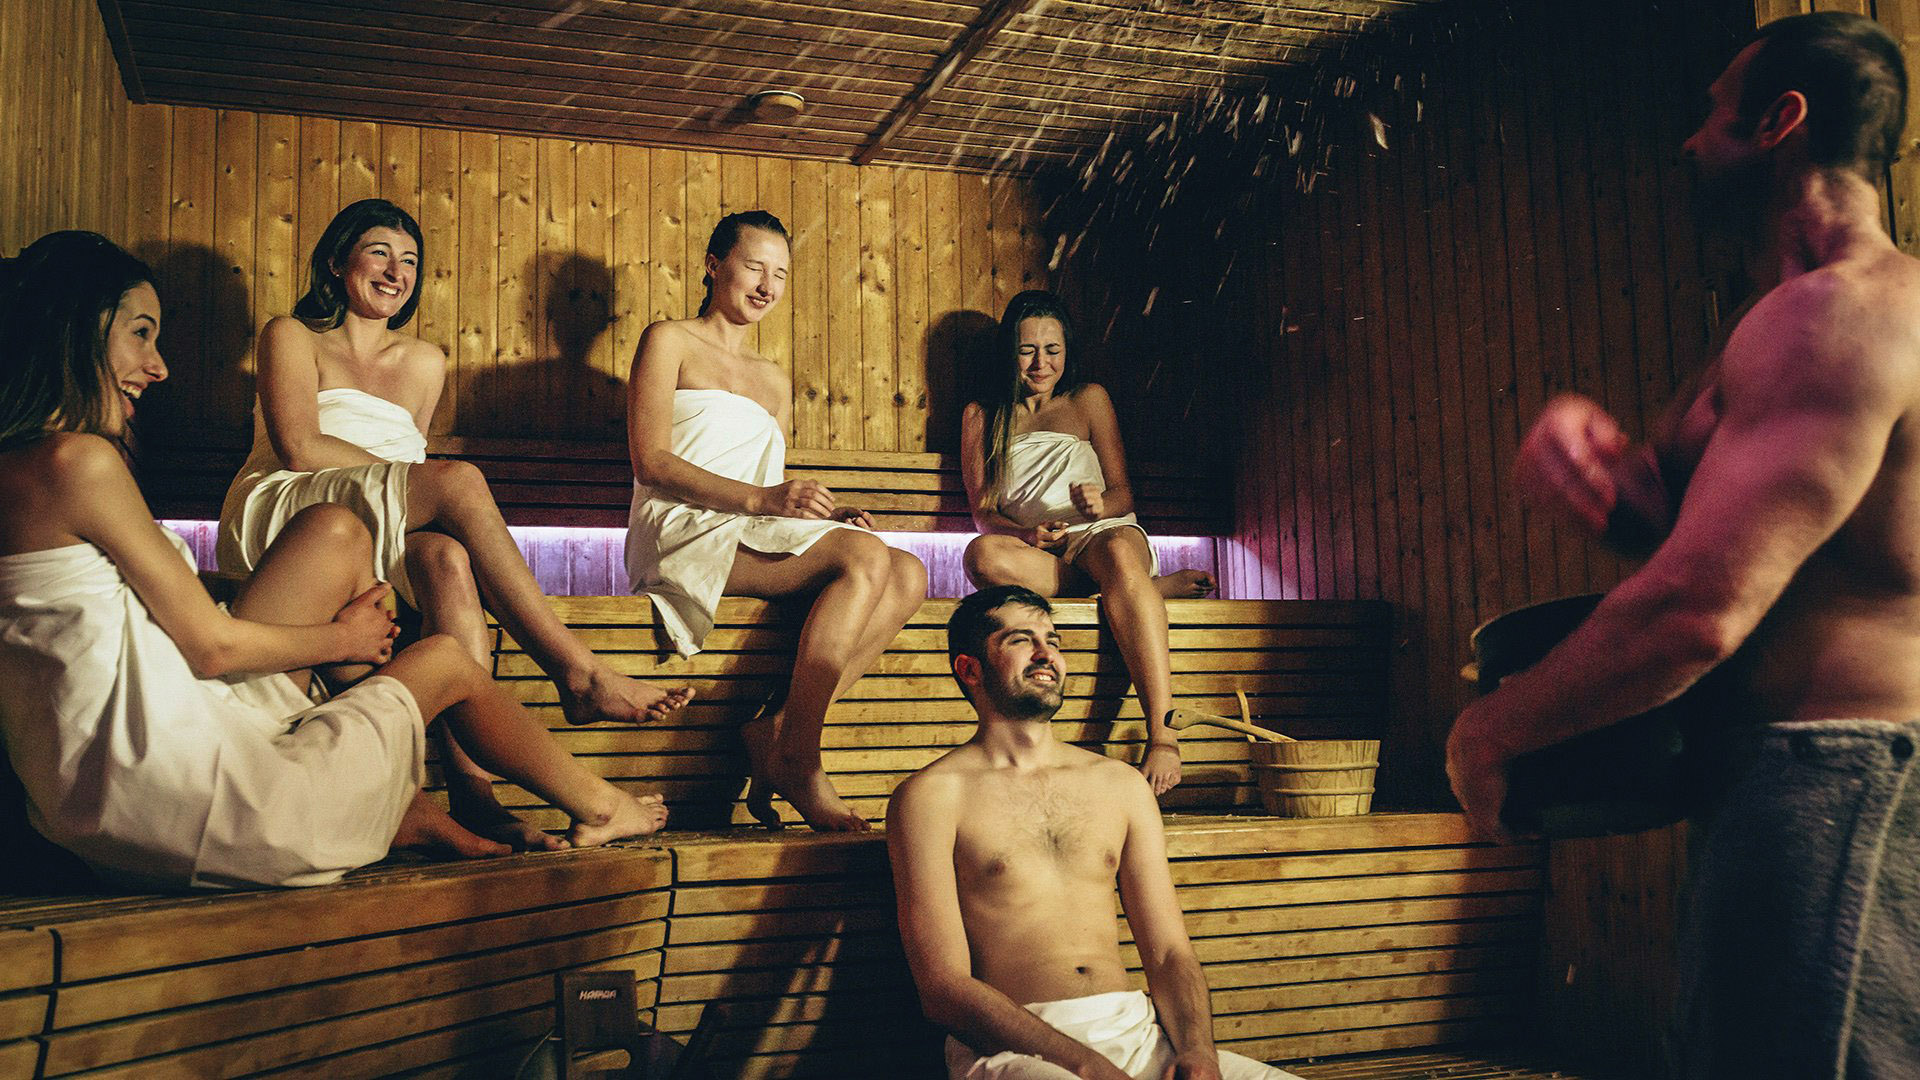 Black white teen sauna fan images